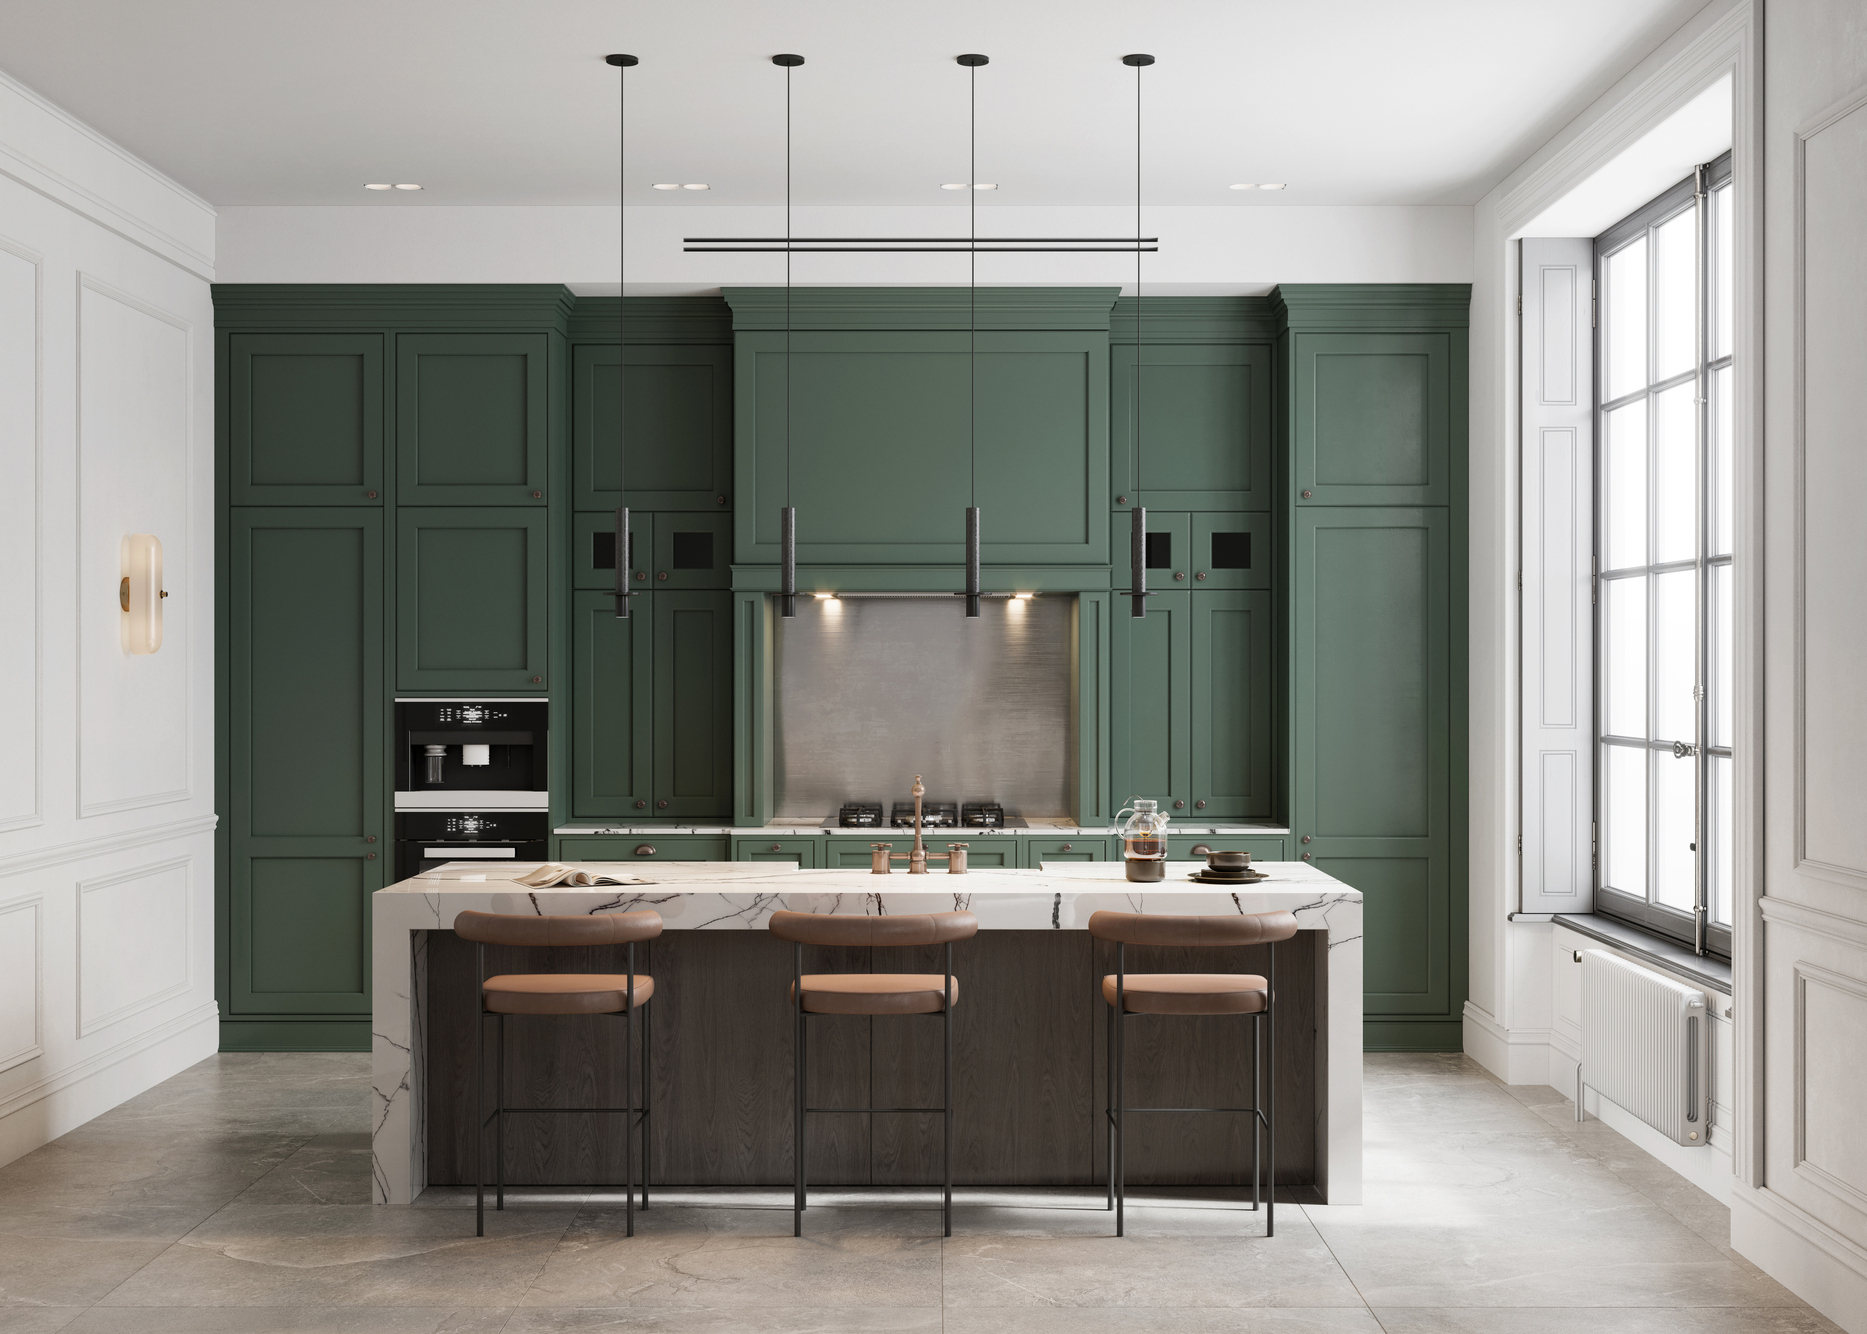 Modern-kitchen-interior-with-green-wall-1386951967_3737x2669 